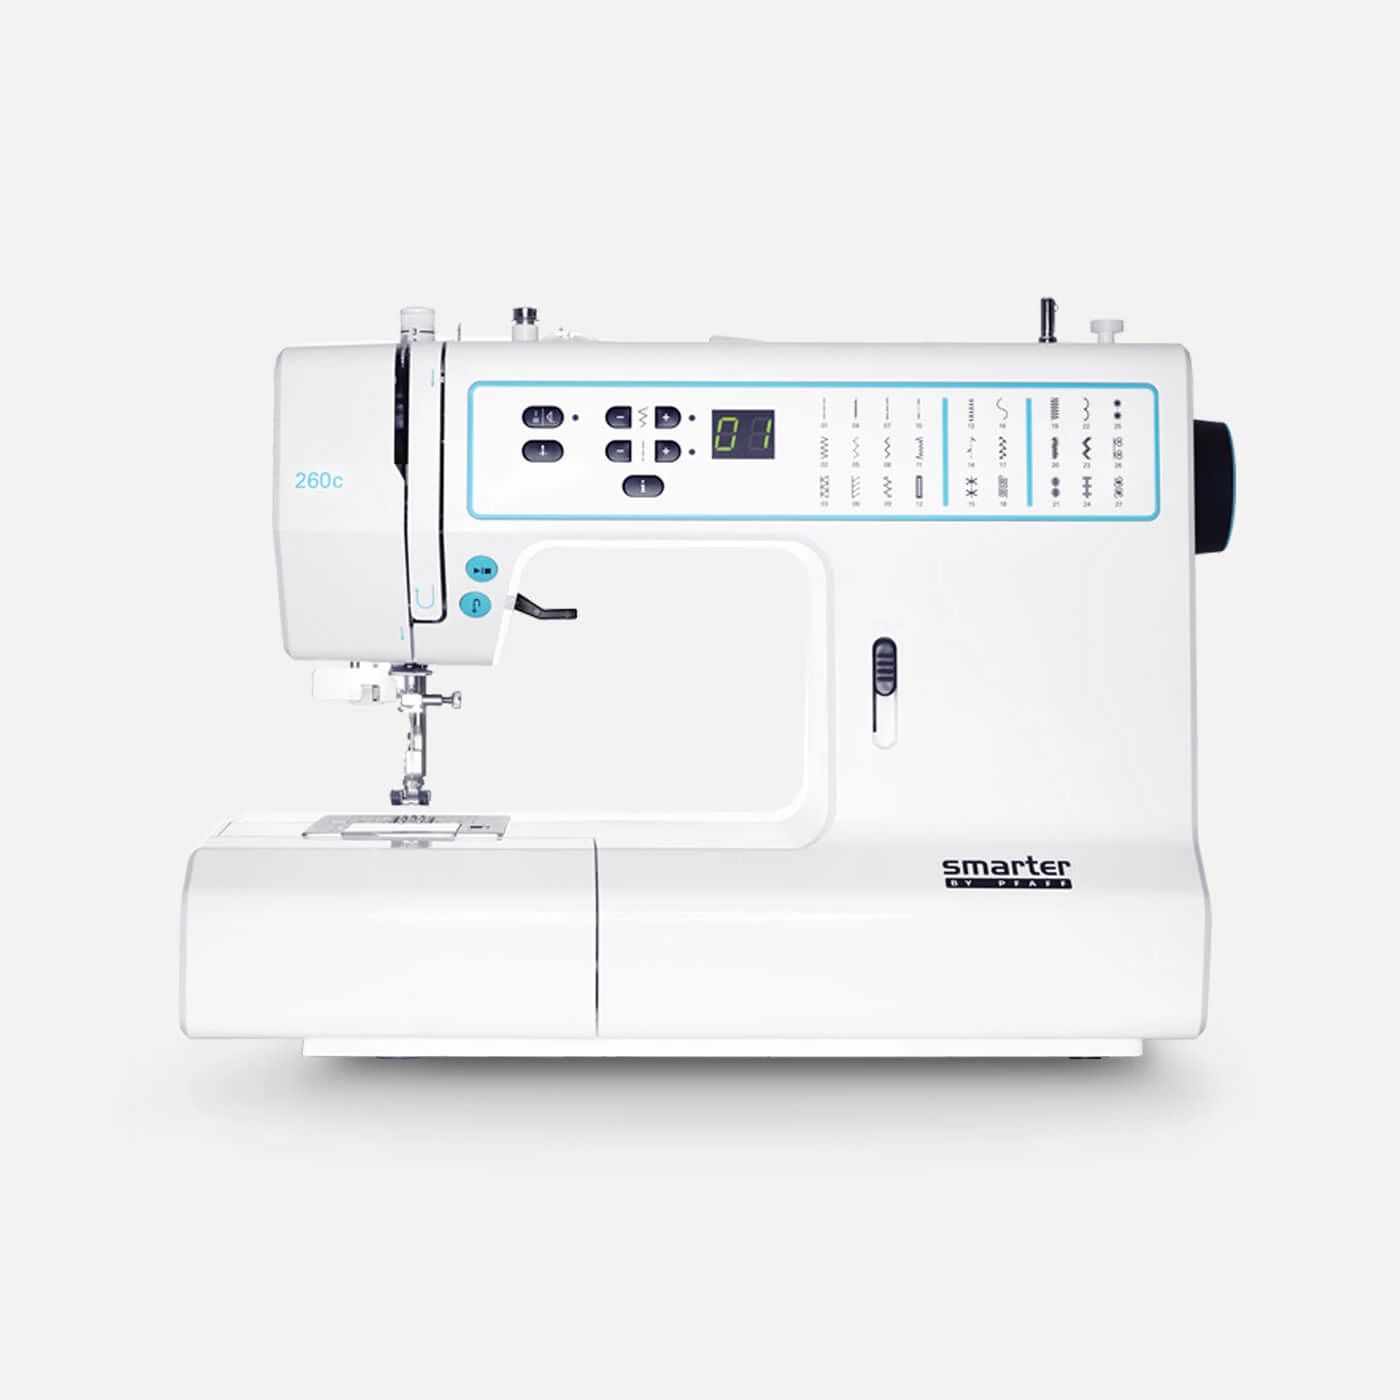 SMARTER BY PFAFF™ 260c Sewing Machine image